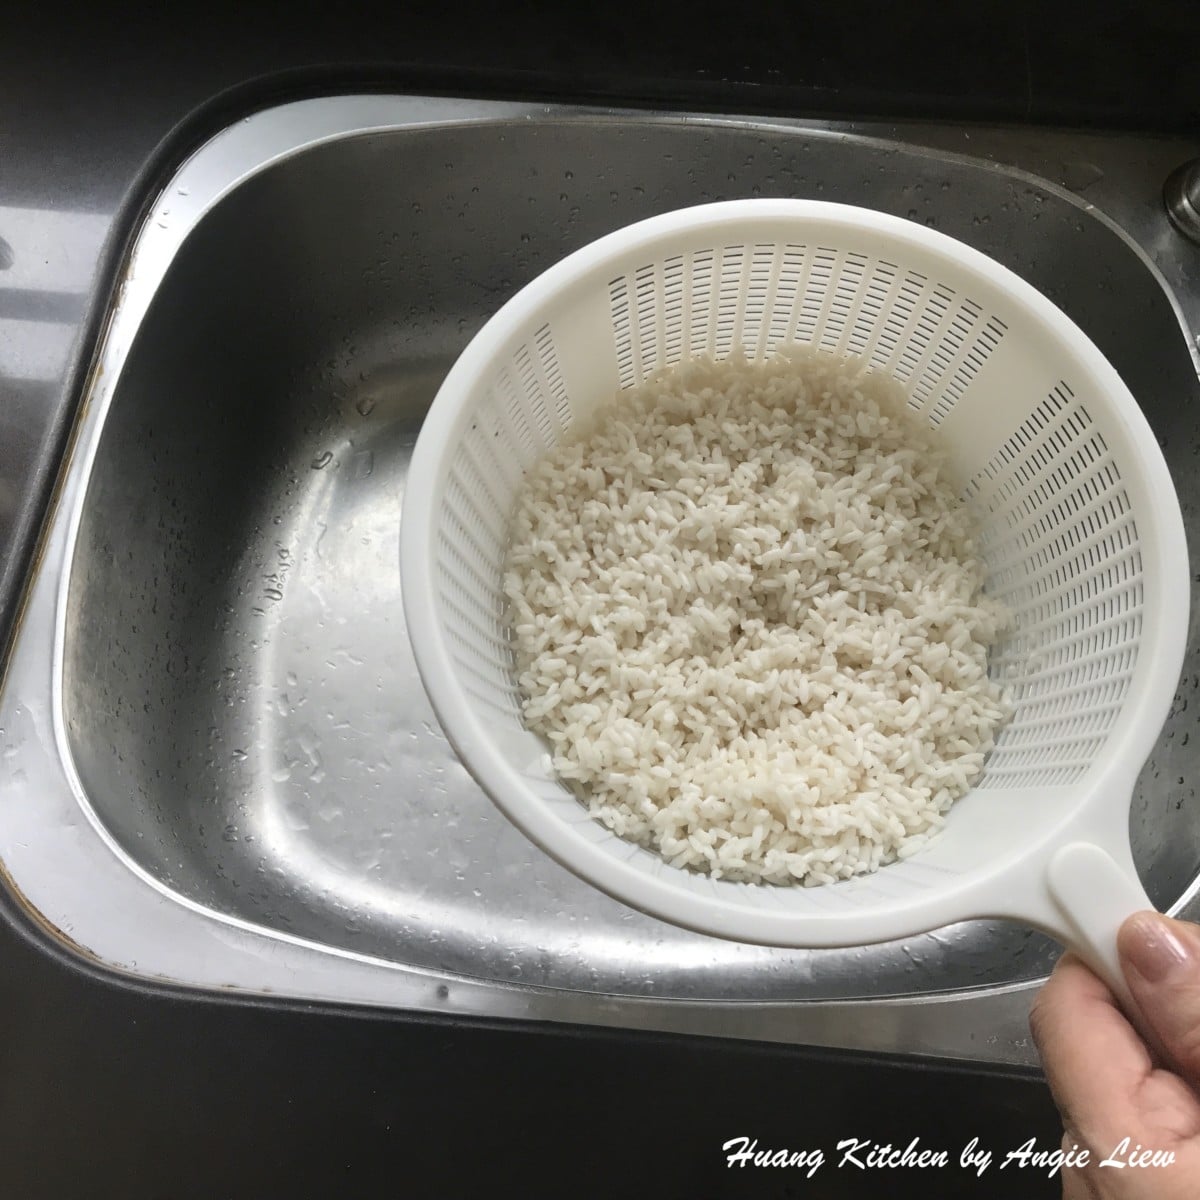 Wash dan drain glutinous rice.